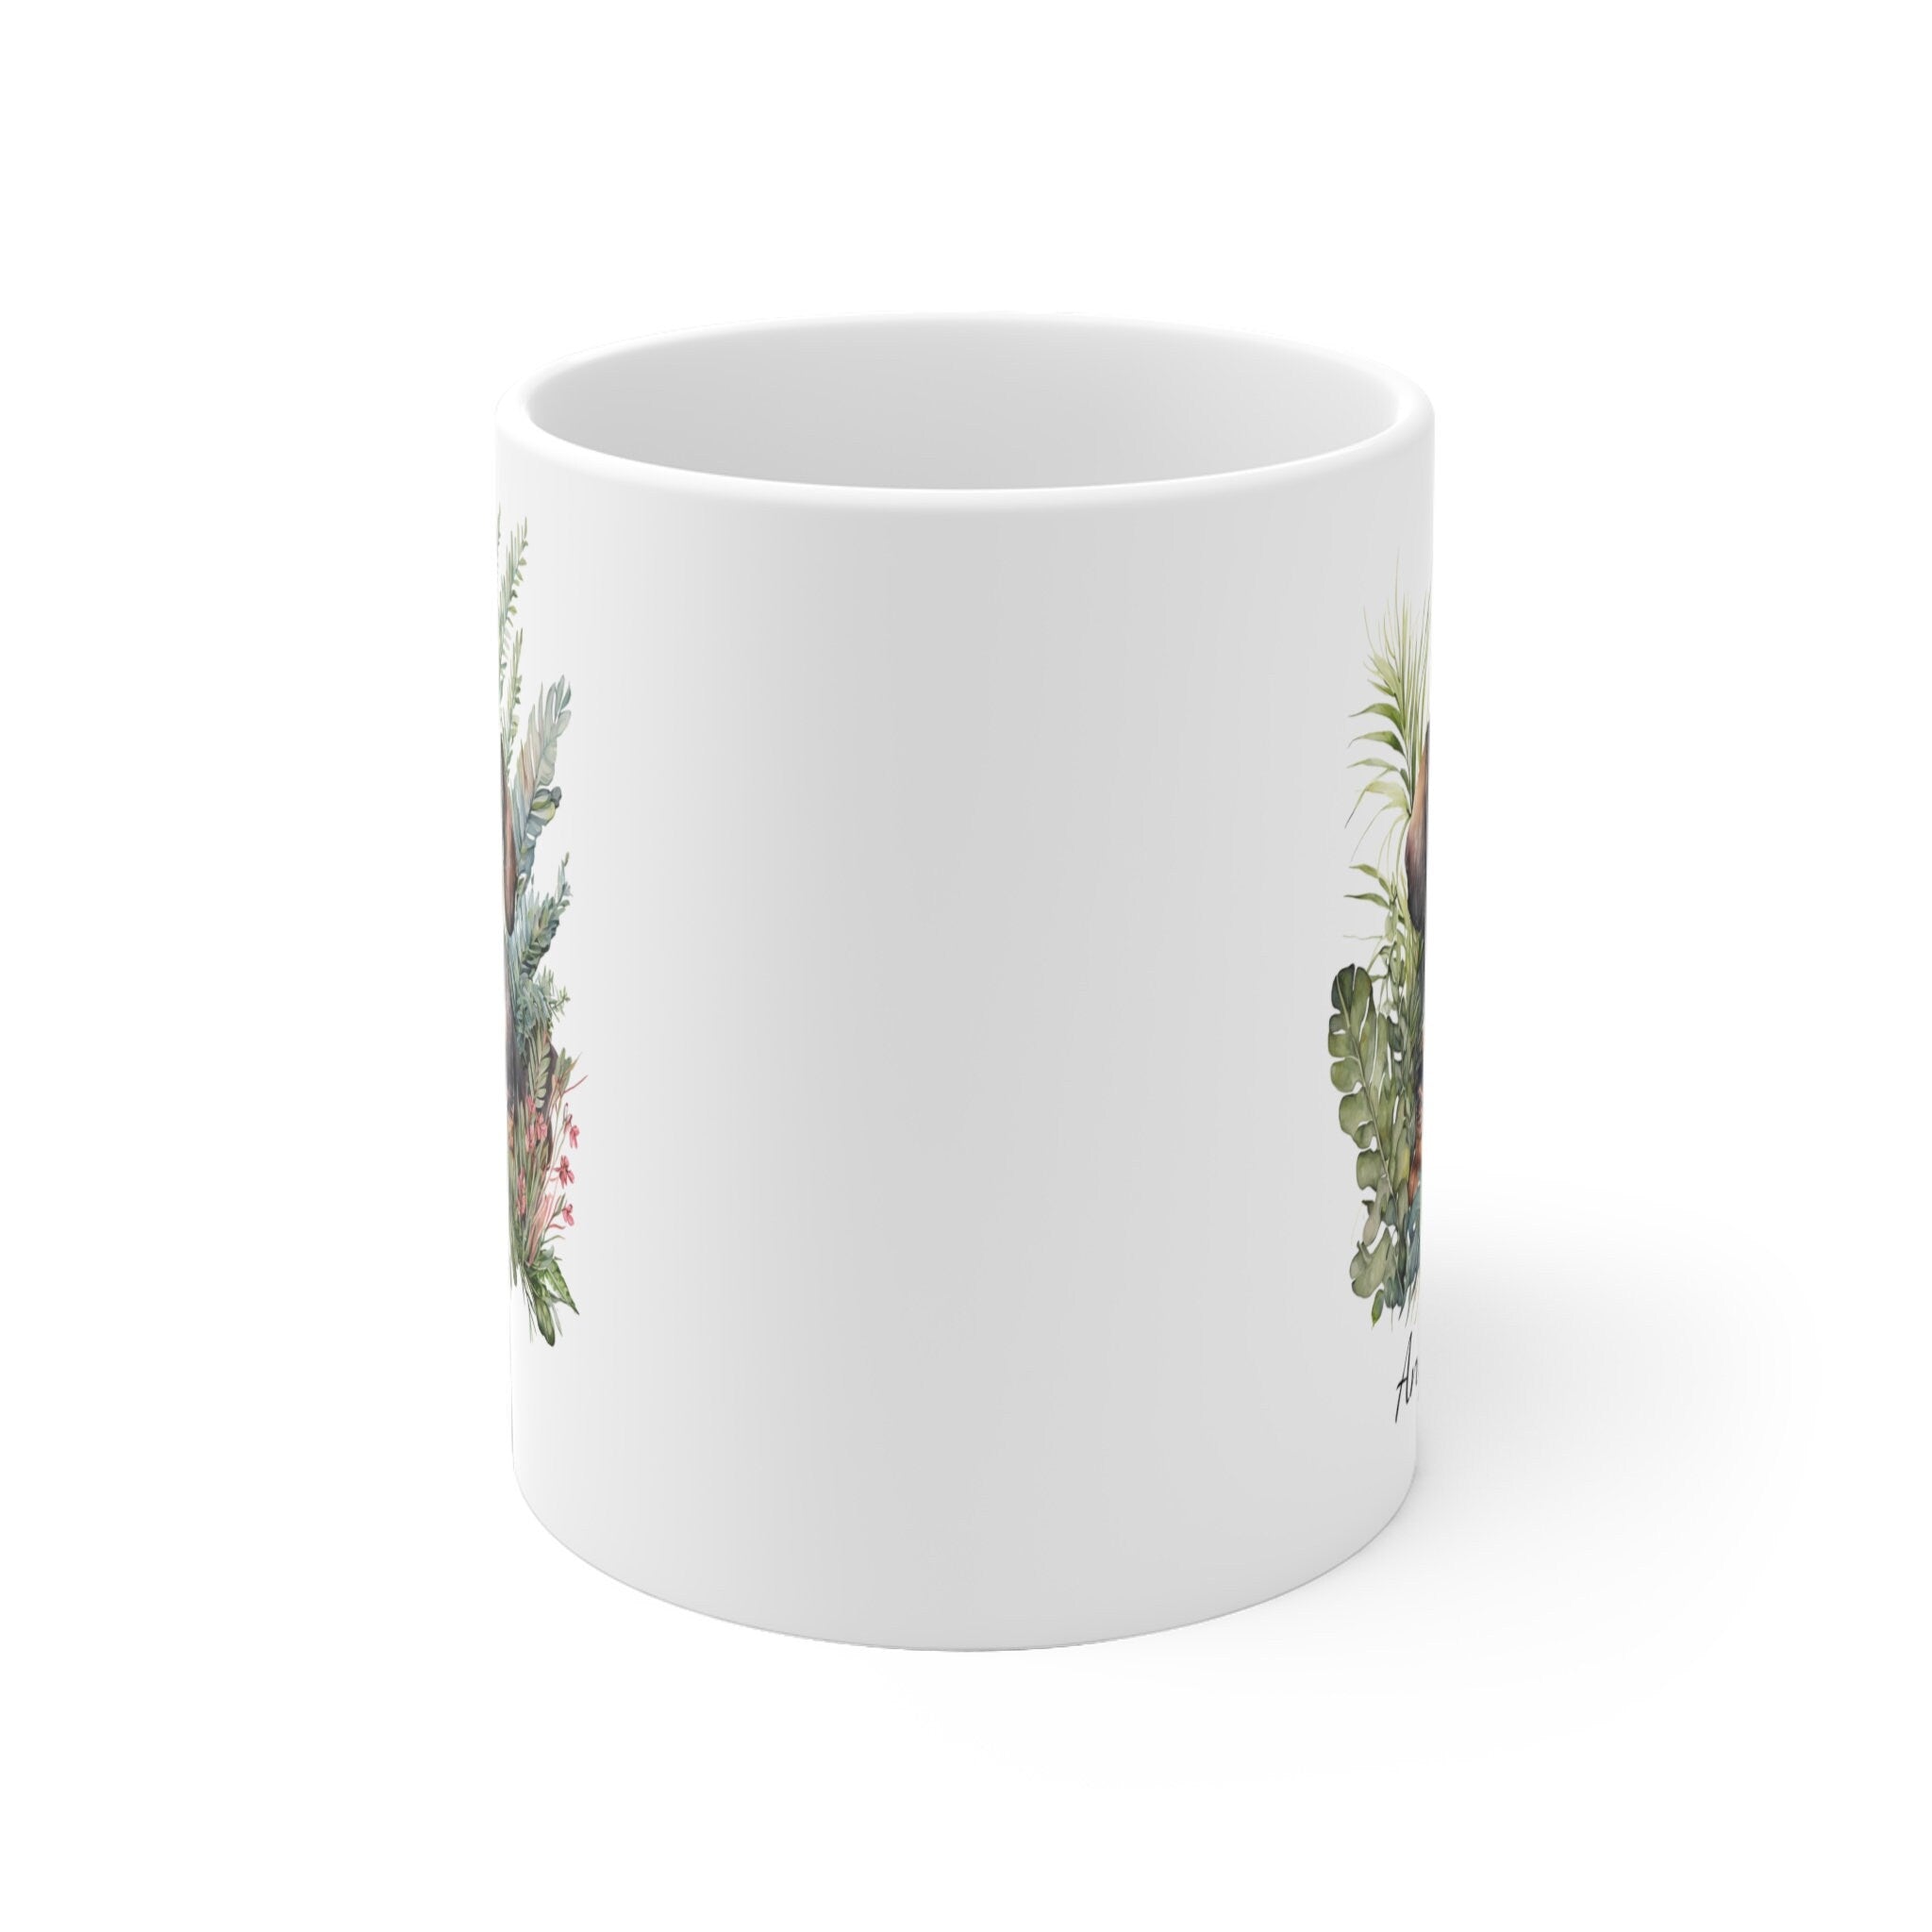 Personalized Dachshund Coffee Mug